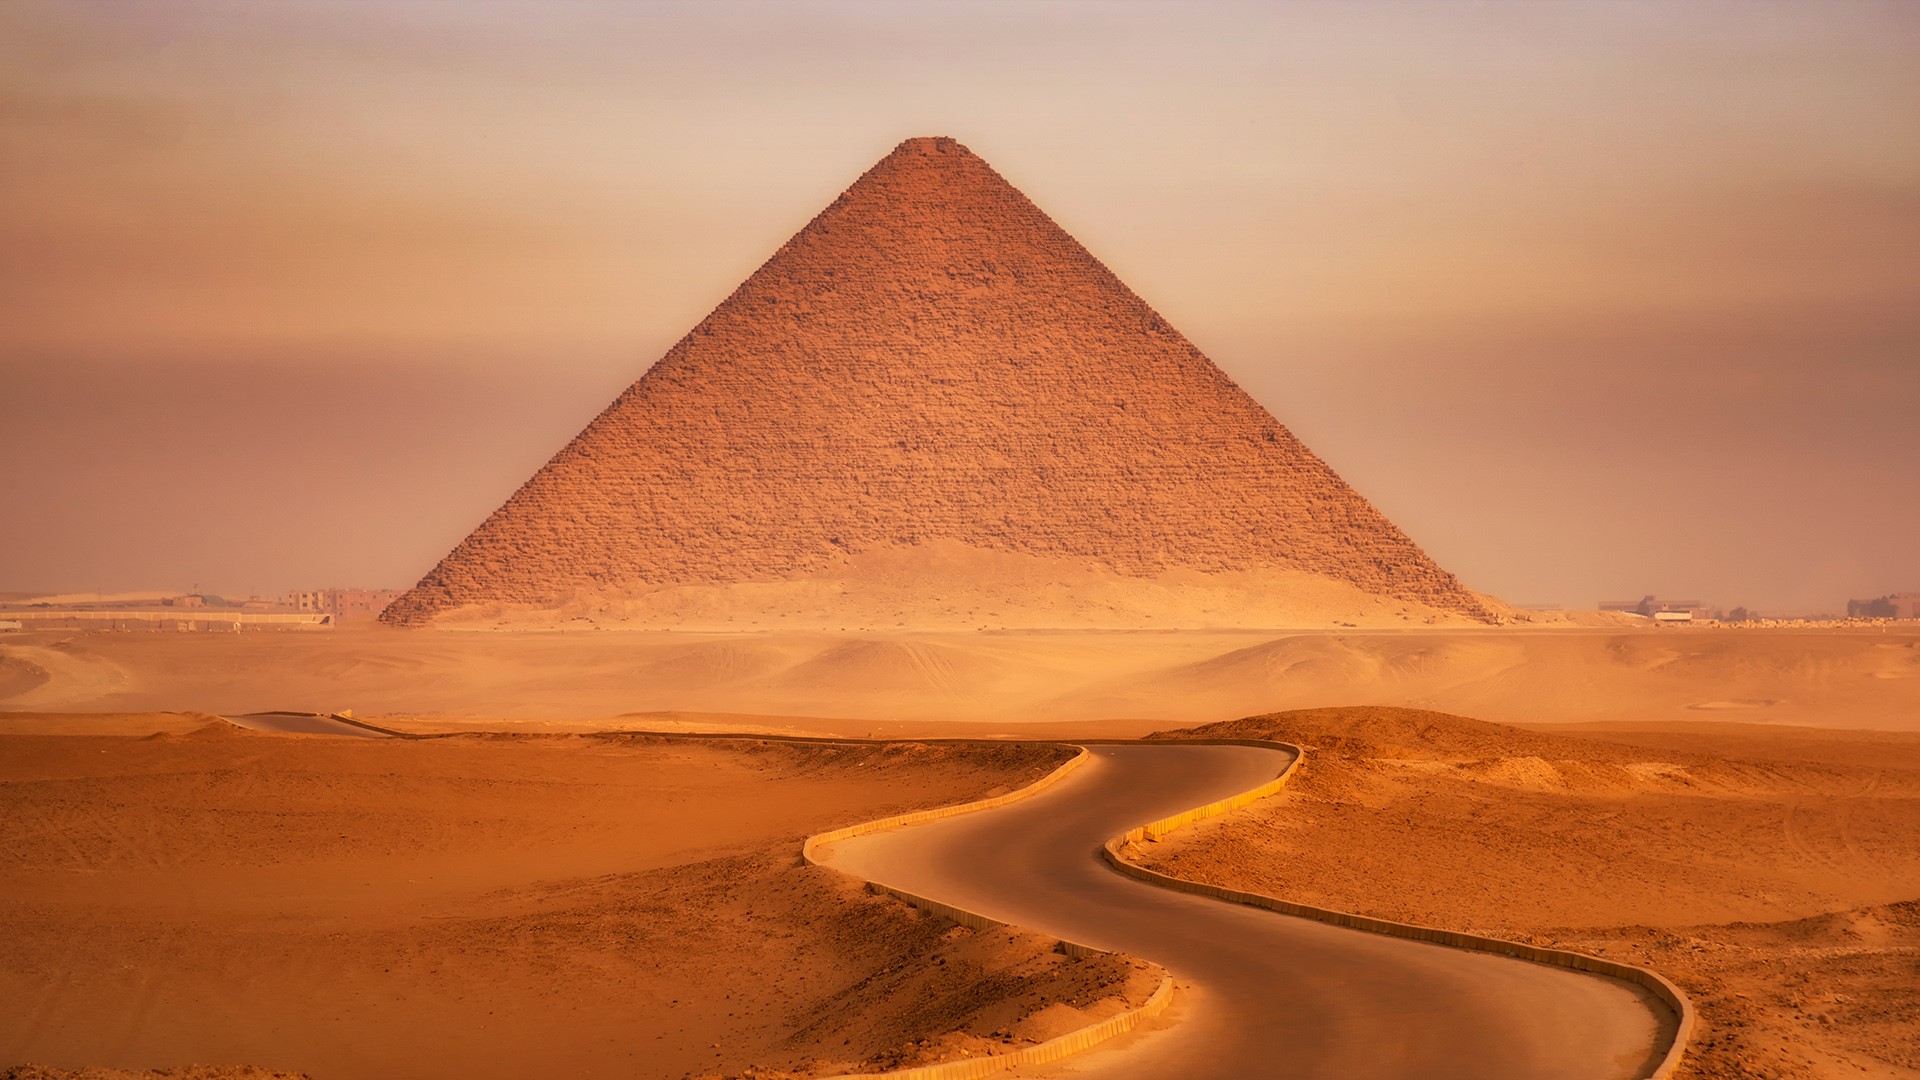 Red Pyramid of Dahshur, Cairo, Egypt | Windows 10 Spotlight Images